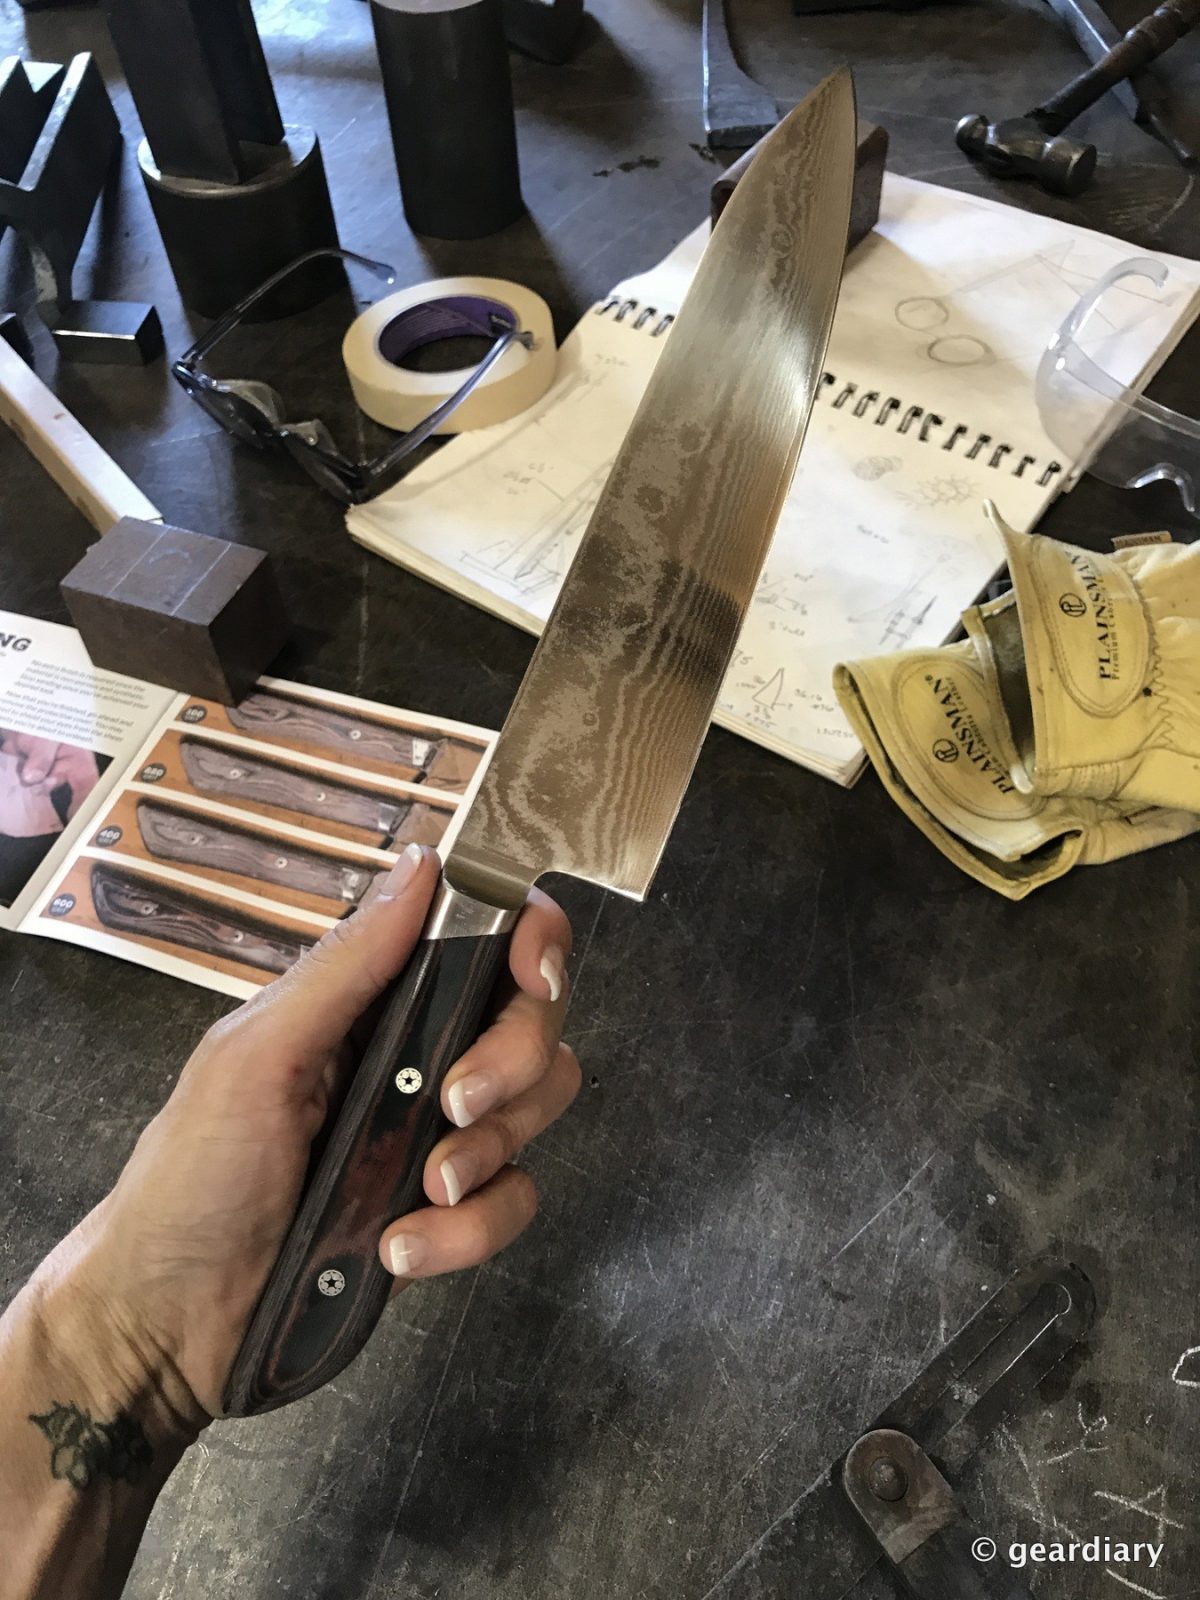 https://geardiary.com/wp-content/uploads/2017/05/26-Finishing-the-Man-Crates-Damascus-Chef-Knife-025.jpg